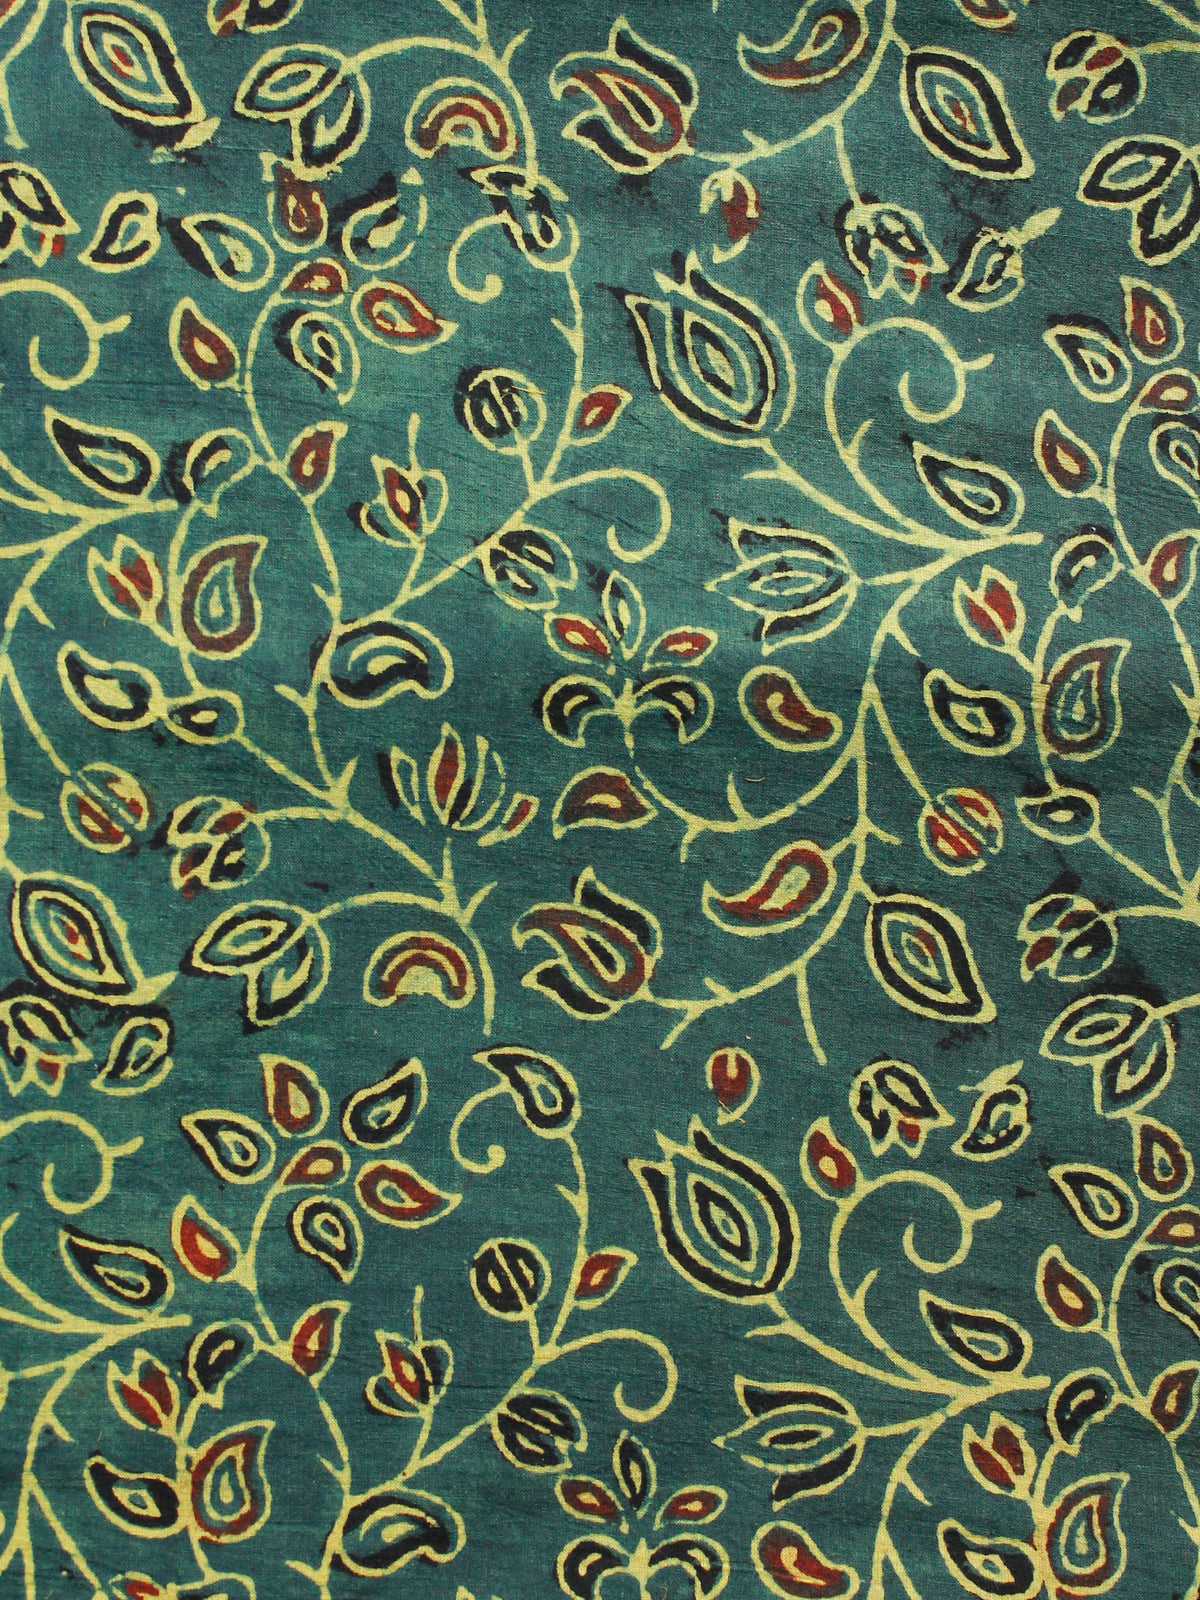 Green Rust Yellow Black Ajrakh Hand Block Printed Cotton Fabric Per Meter - F003F1656